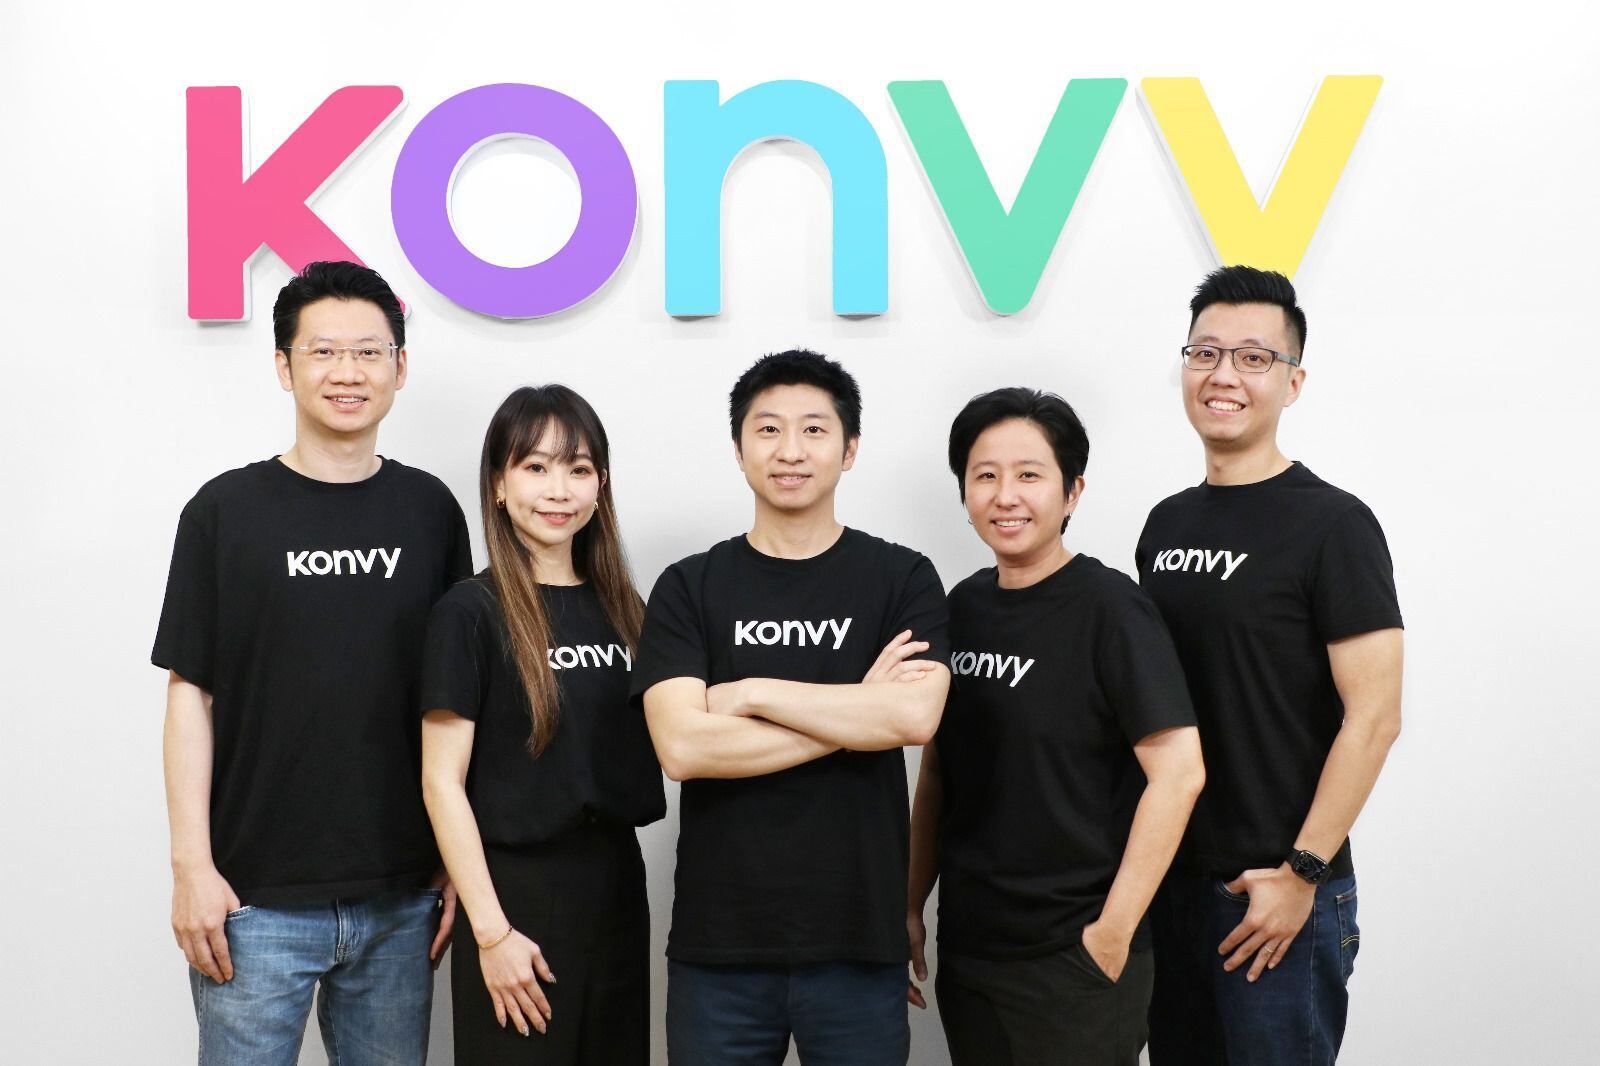 Thai Beauty Retailer Konvy Secures $11 Million Investment